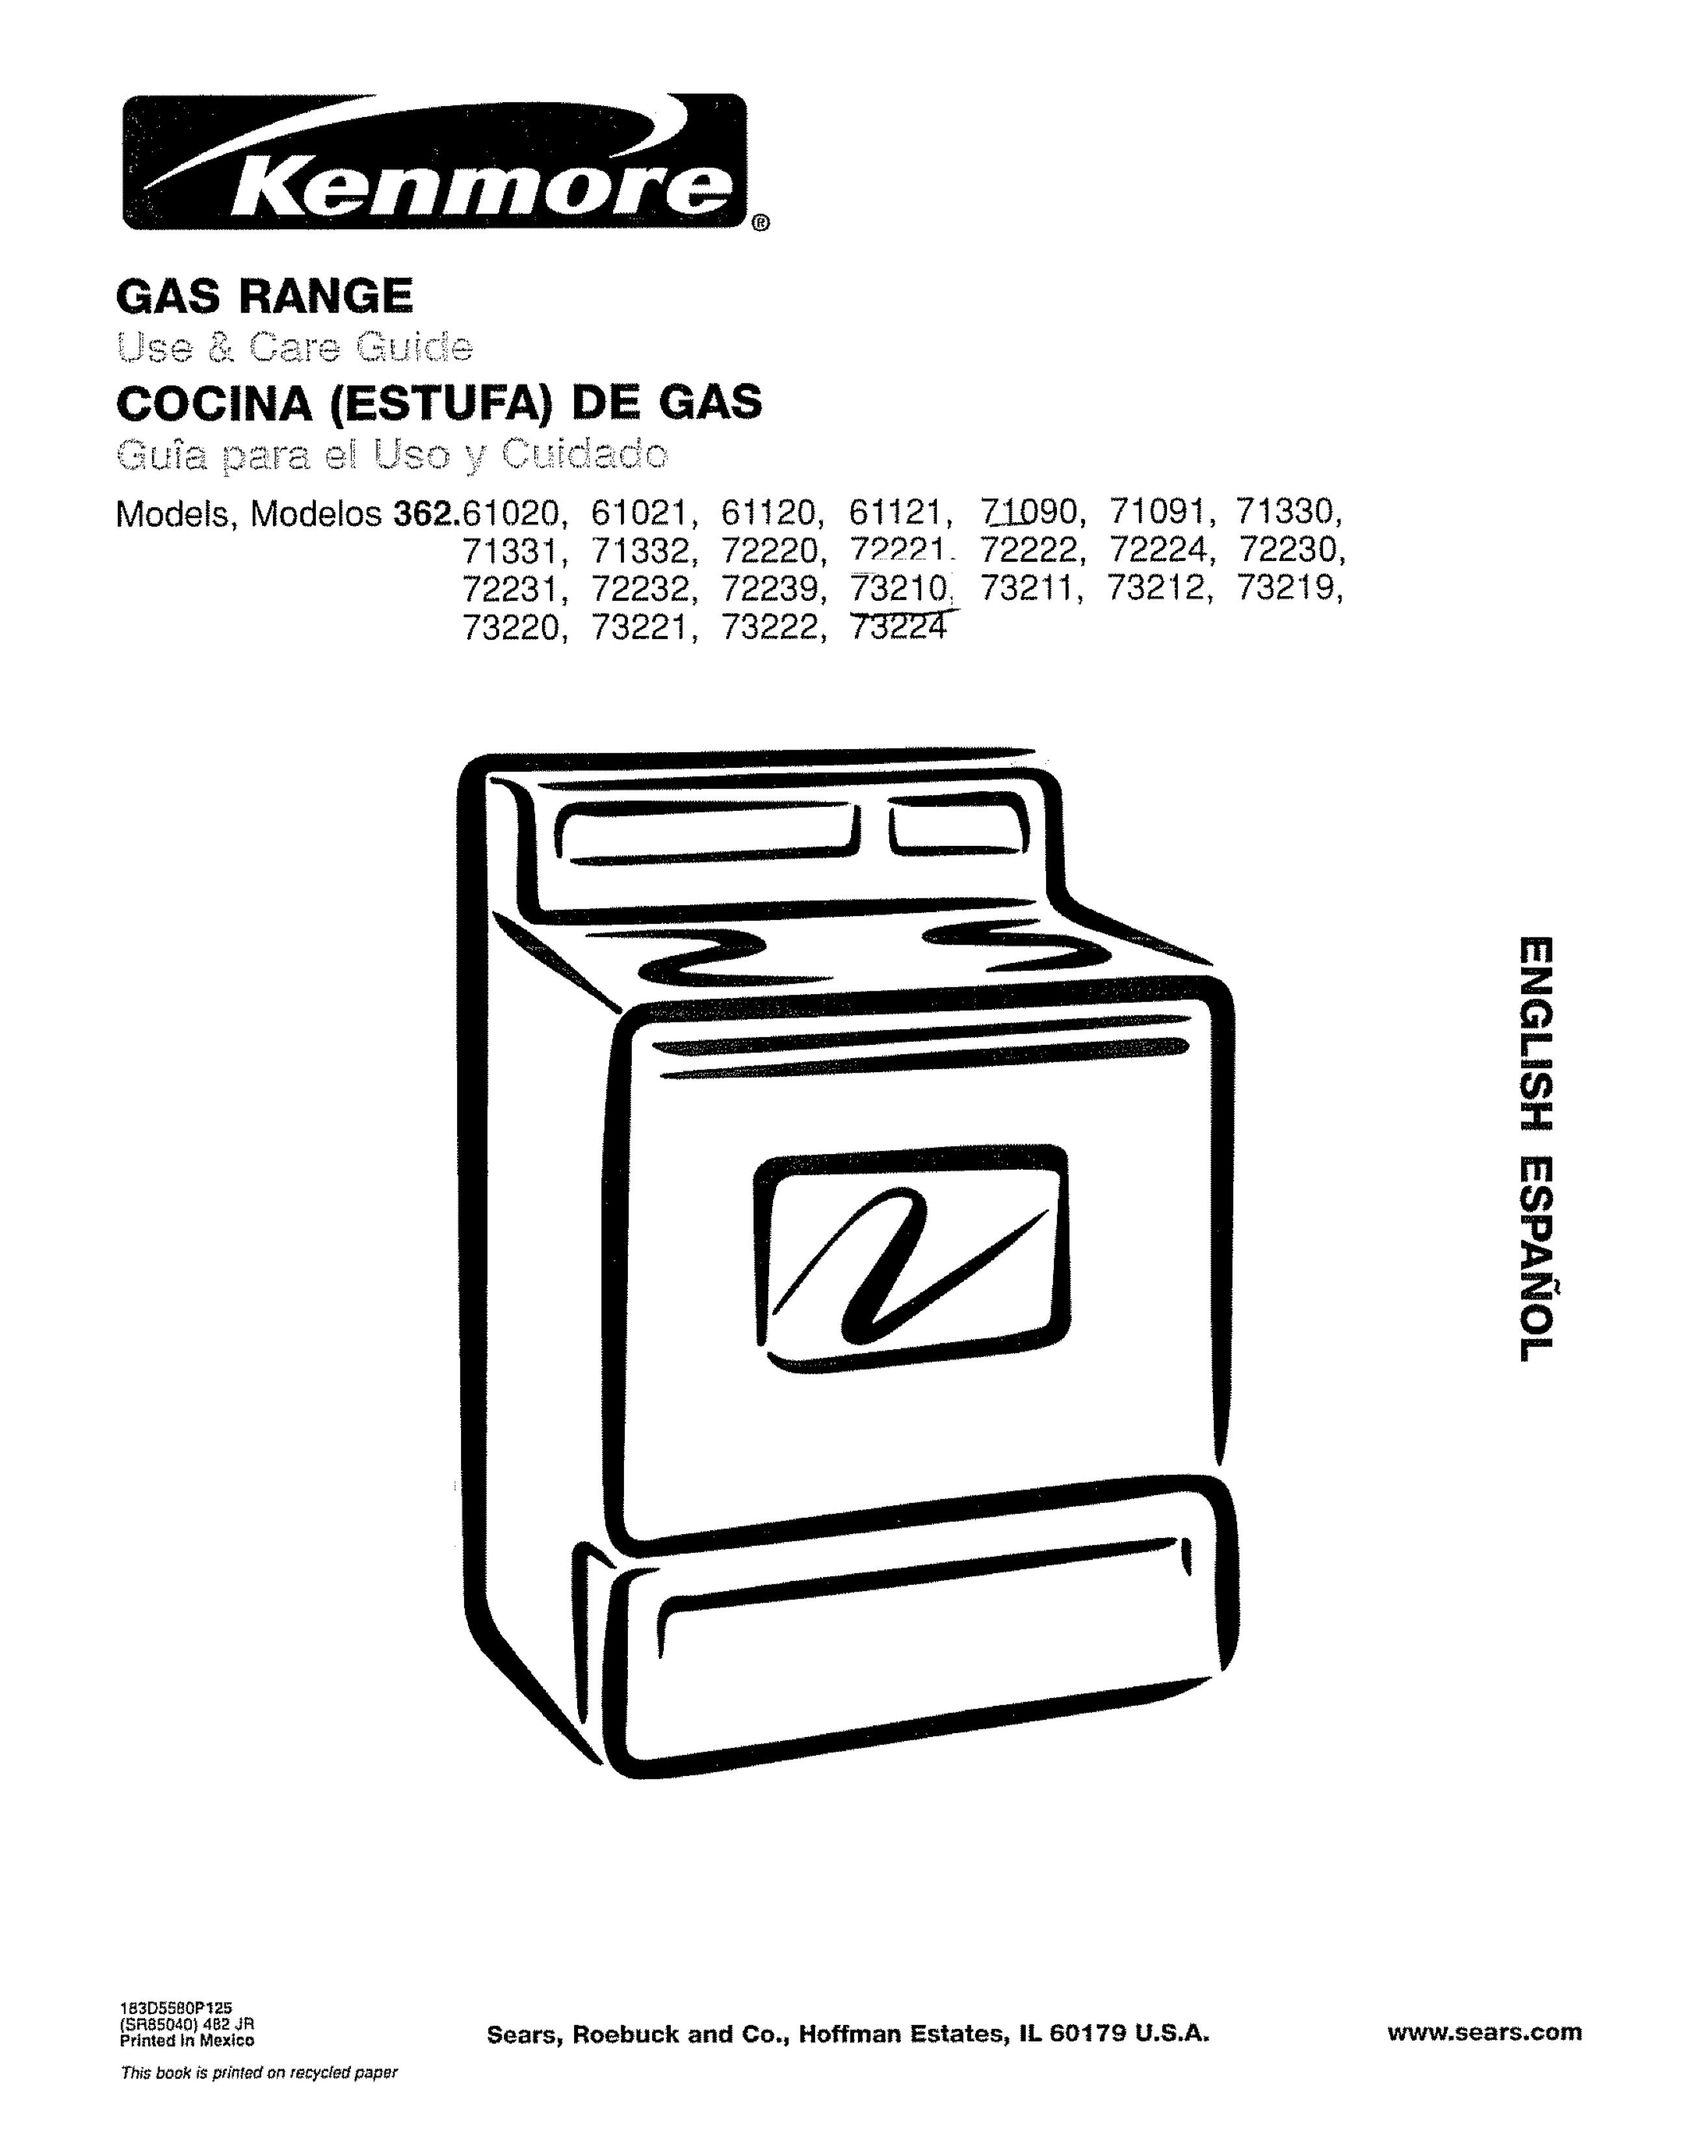 Kenmore 362.72230 Range User Manual